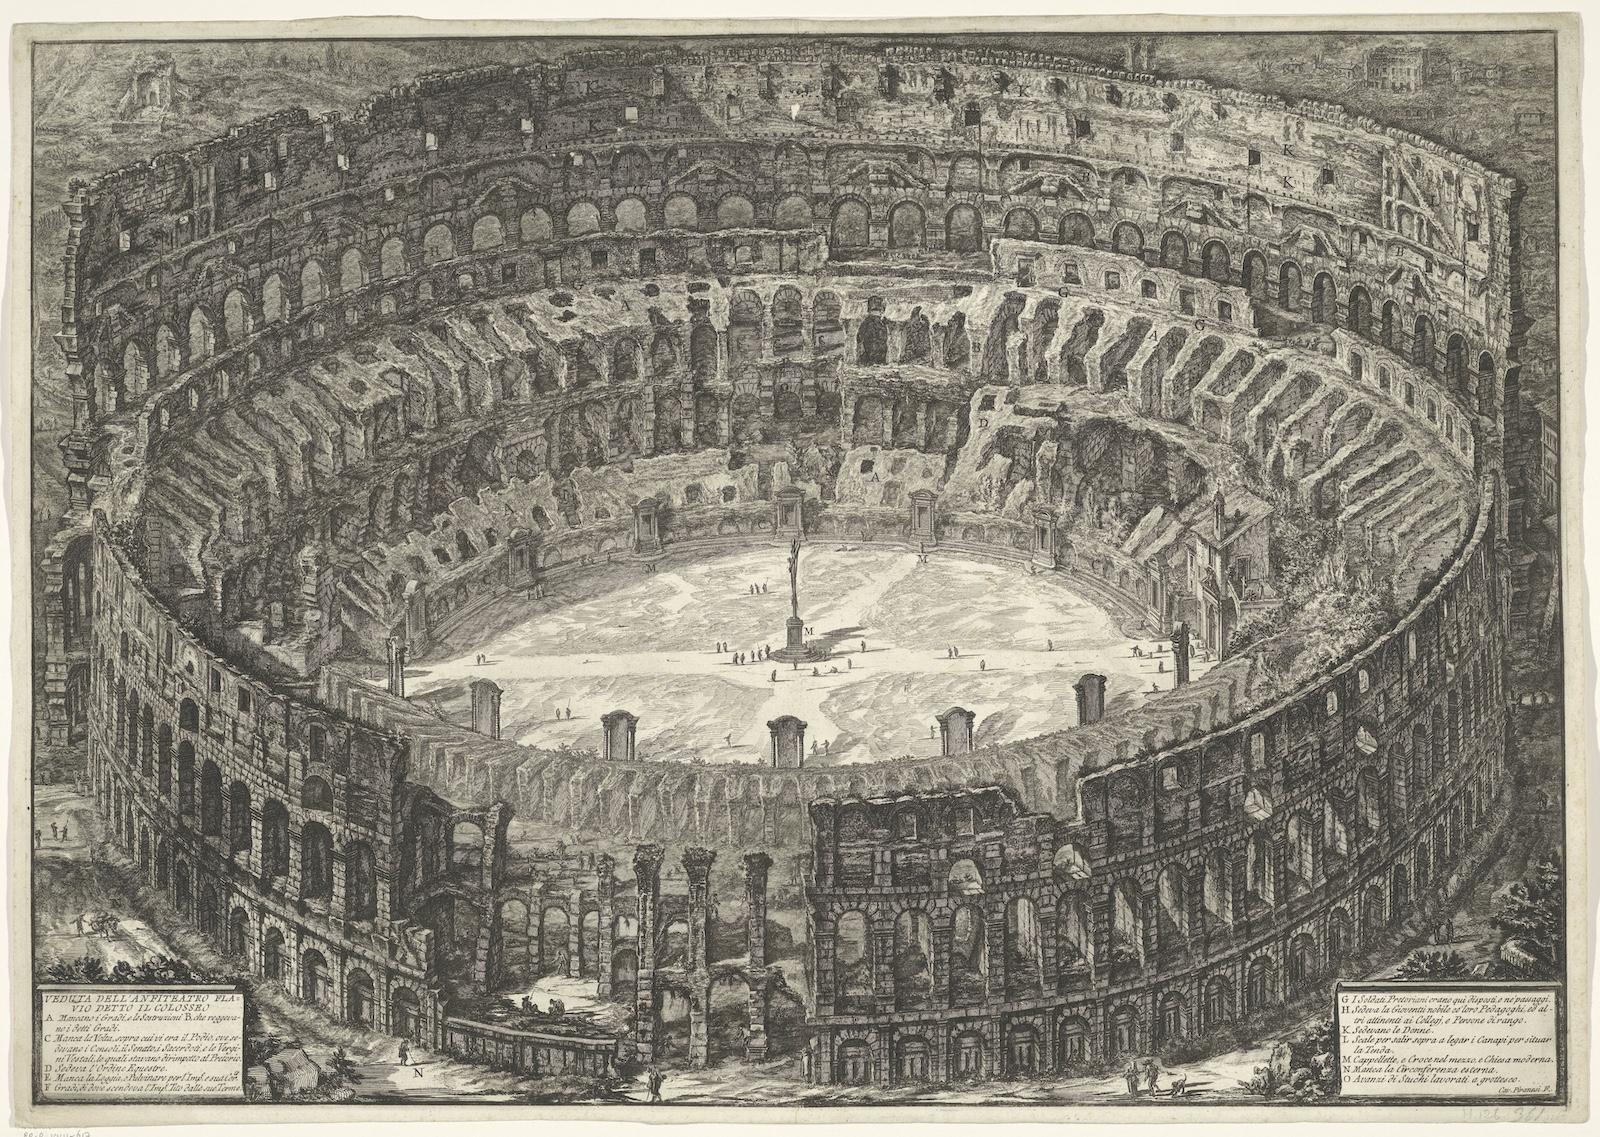 Print of the Colosseum by Giovanni Battista Piranesi from between 1748-1778. Rijksmuseum, Amsterdam.